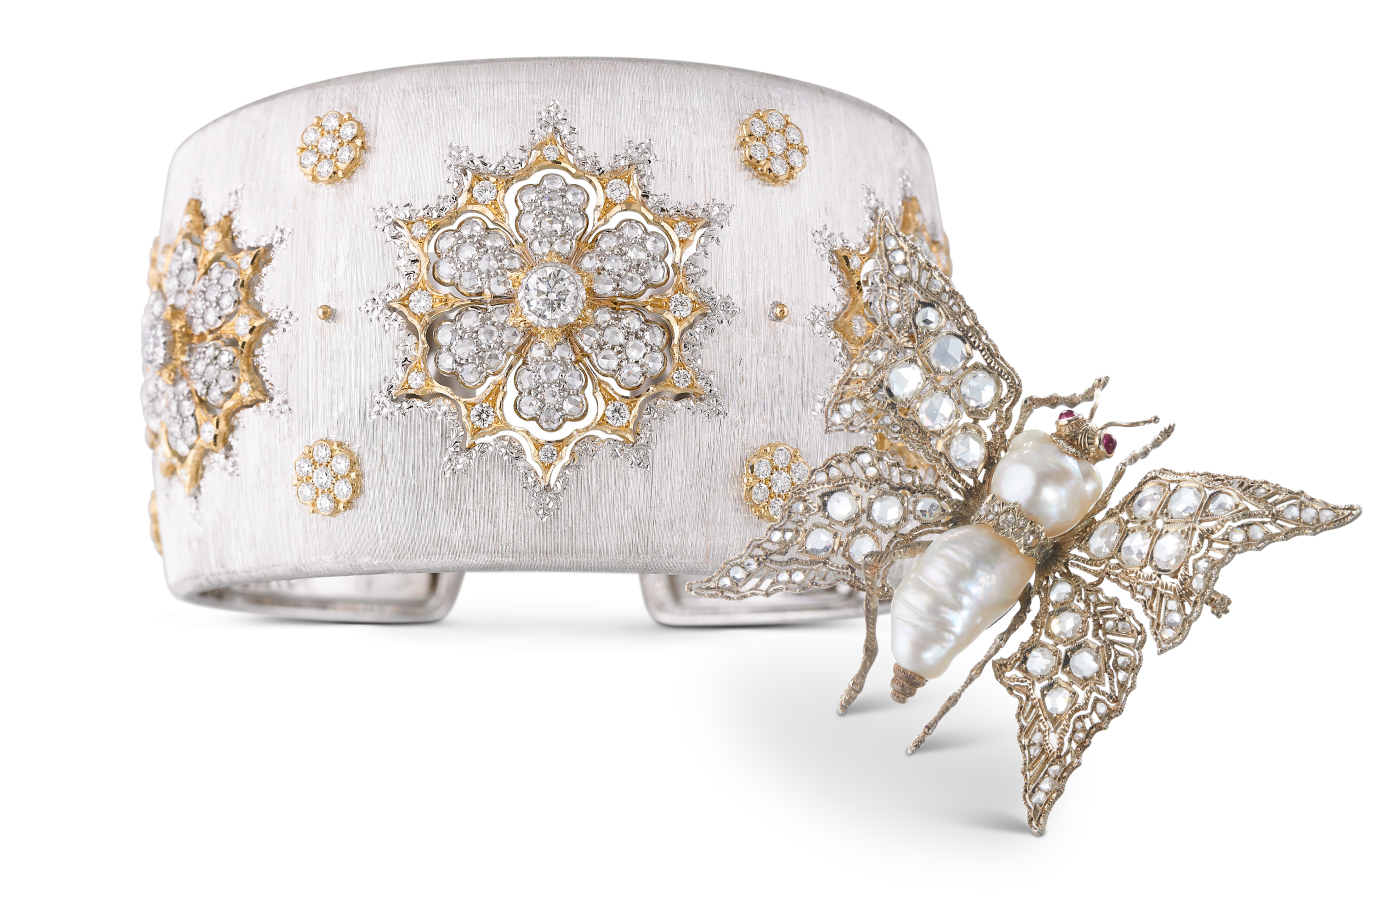 Buccellati High Jewellery Macri cuff bracelet in gold, white gold and diamond, alongside a Buccellati butterfly brooch in gold, silver, baroque pearl and diamond